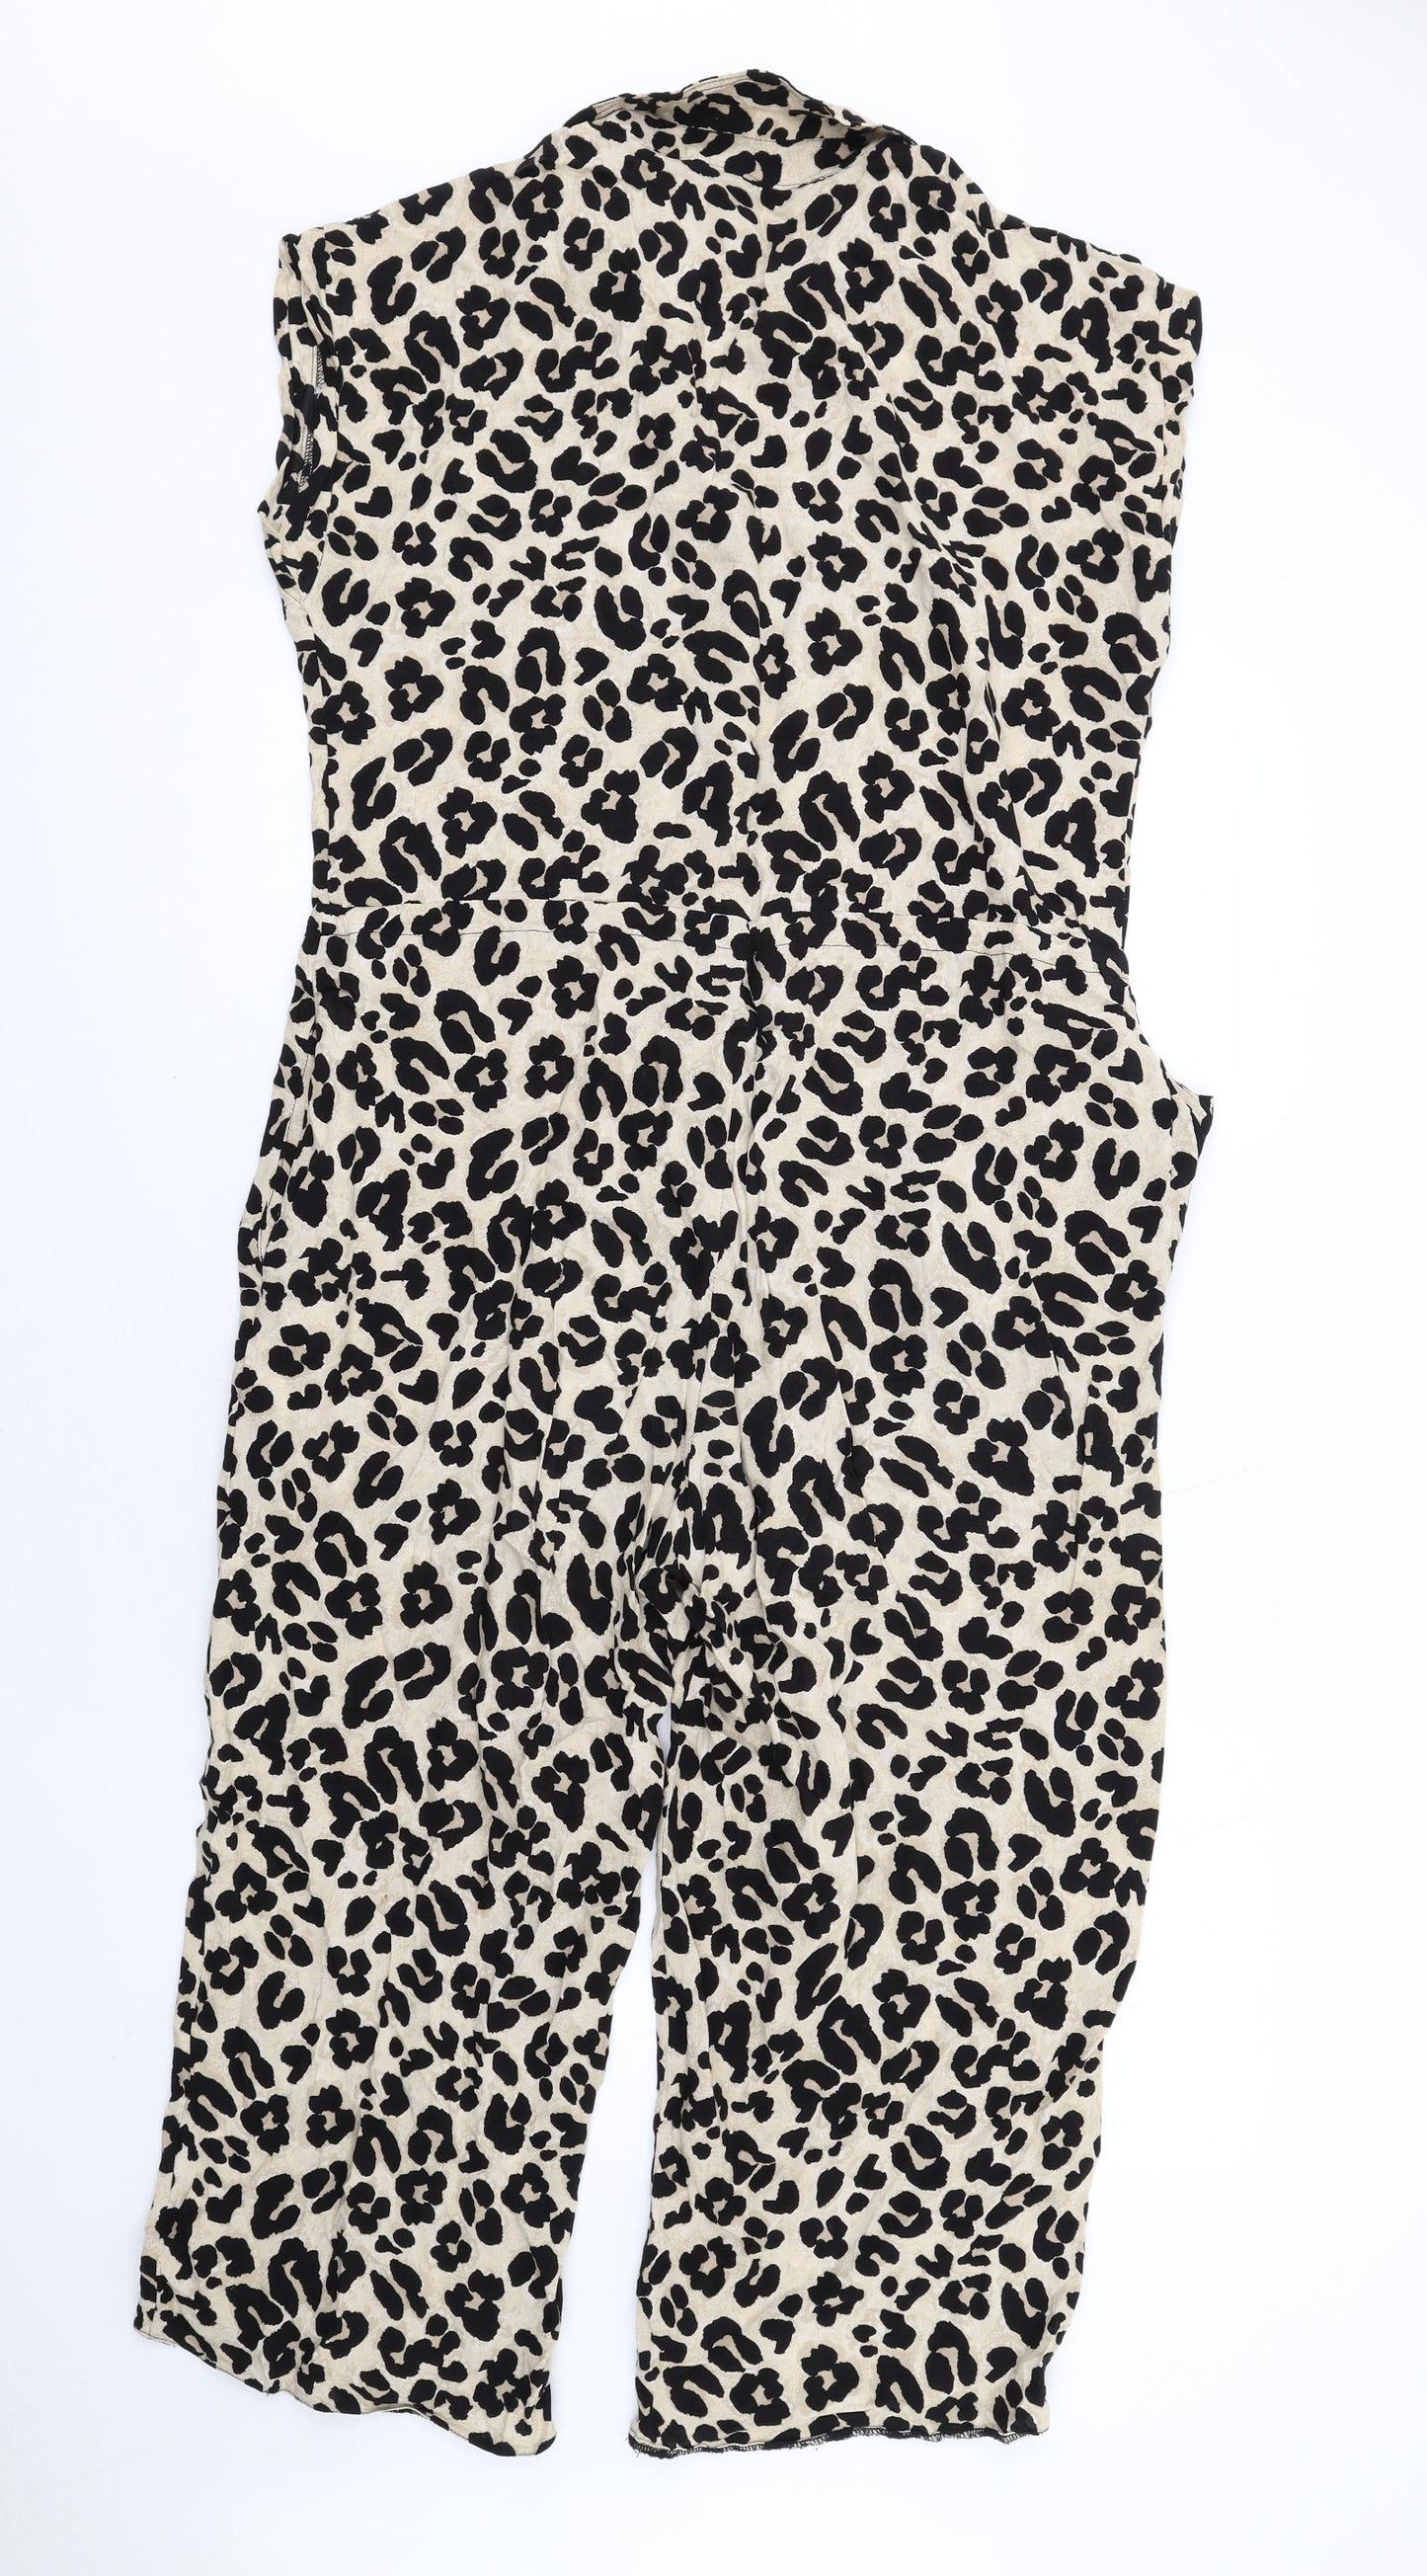 New Look Womens Beige Animal Print Vinyl Jumpsuit One-Piece Size 12 L24 in Button - Leopard Print